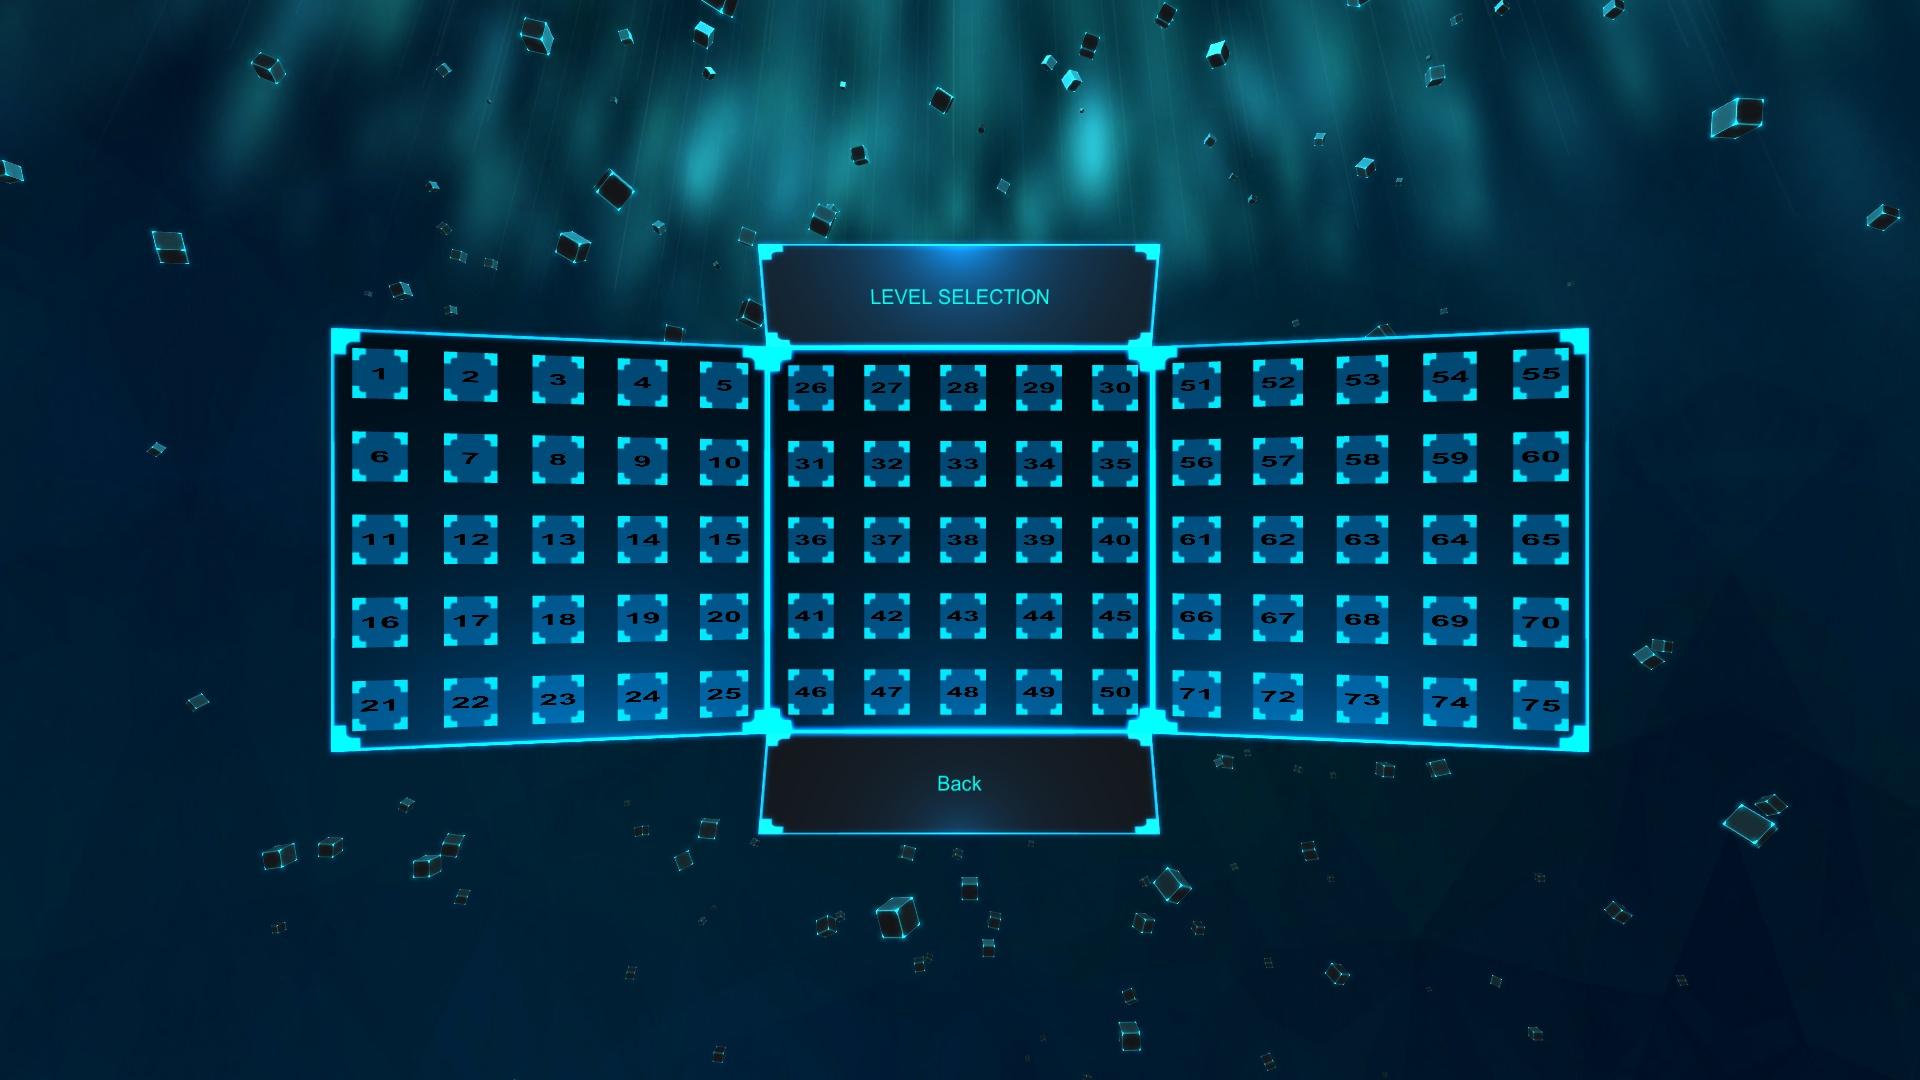 Screenshot №11 from game Cube Runner